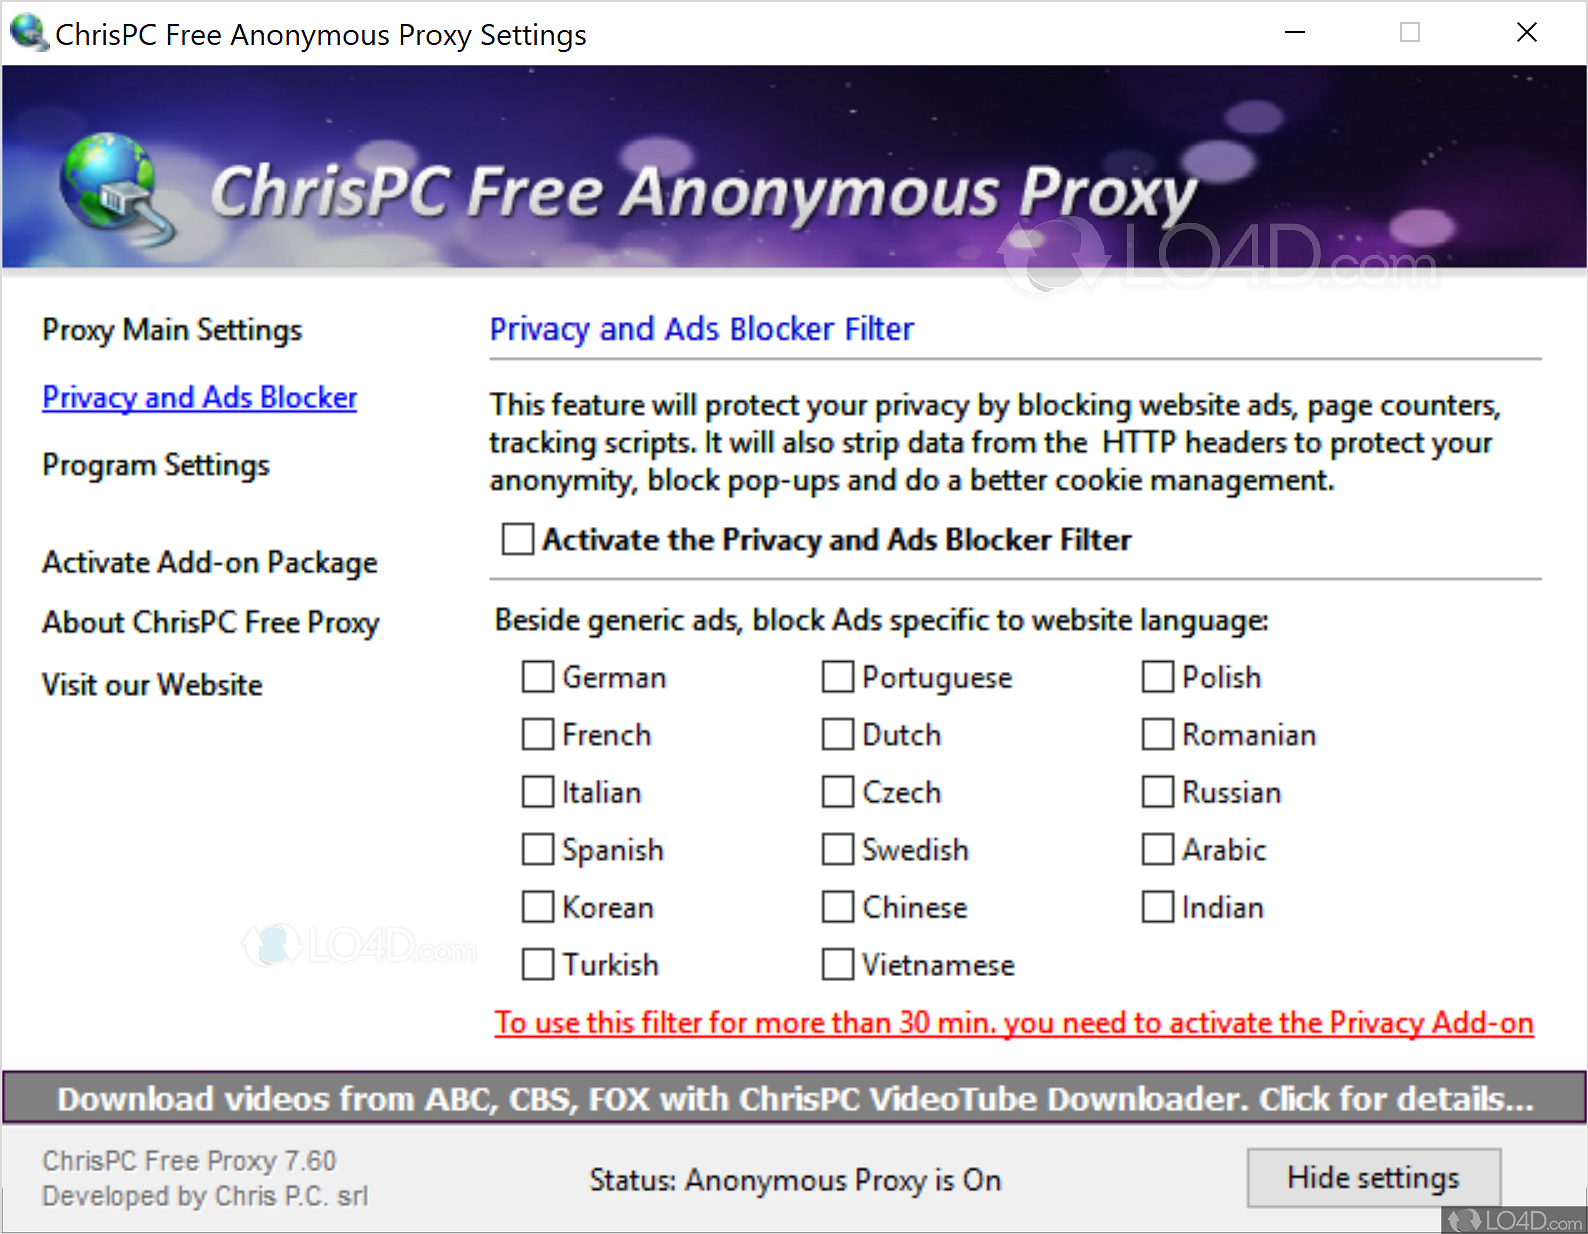 free ChrisPC Free VPN Connection 4.06.15